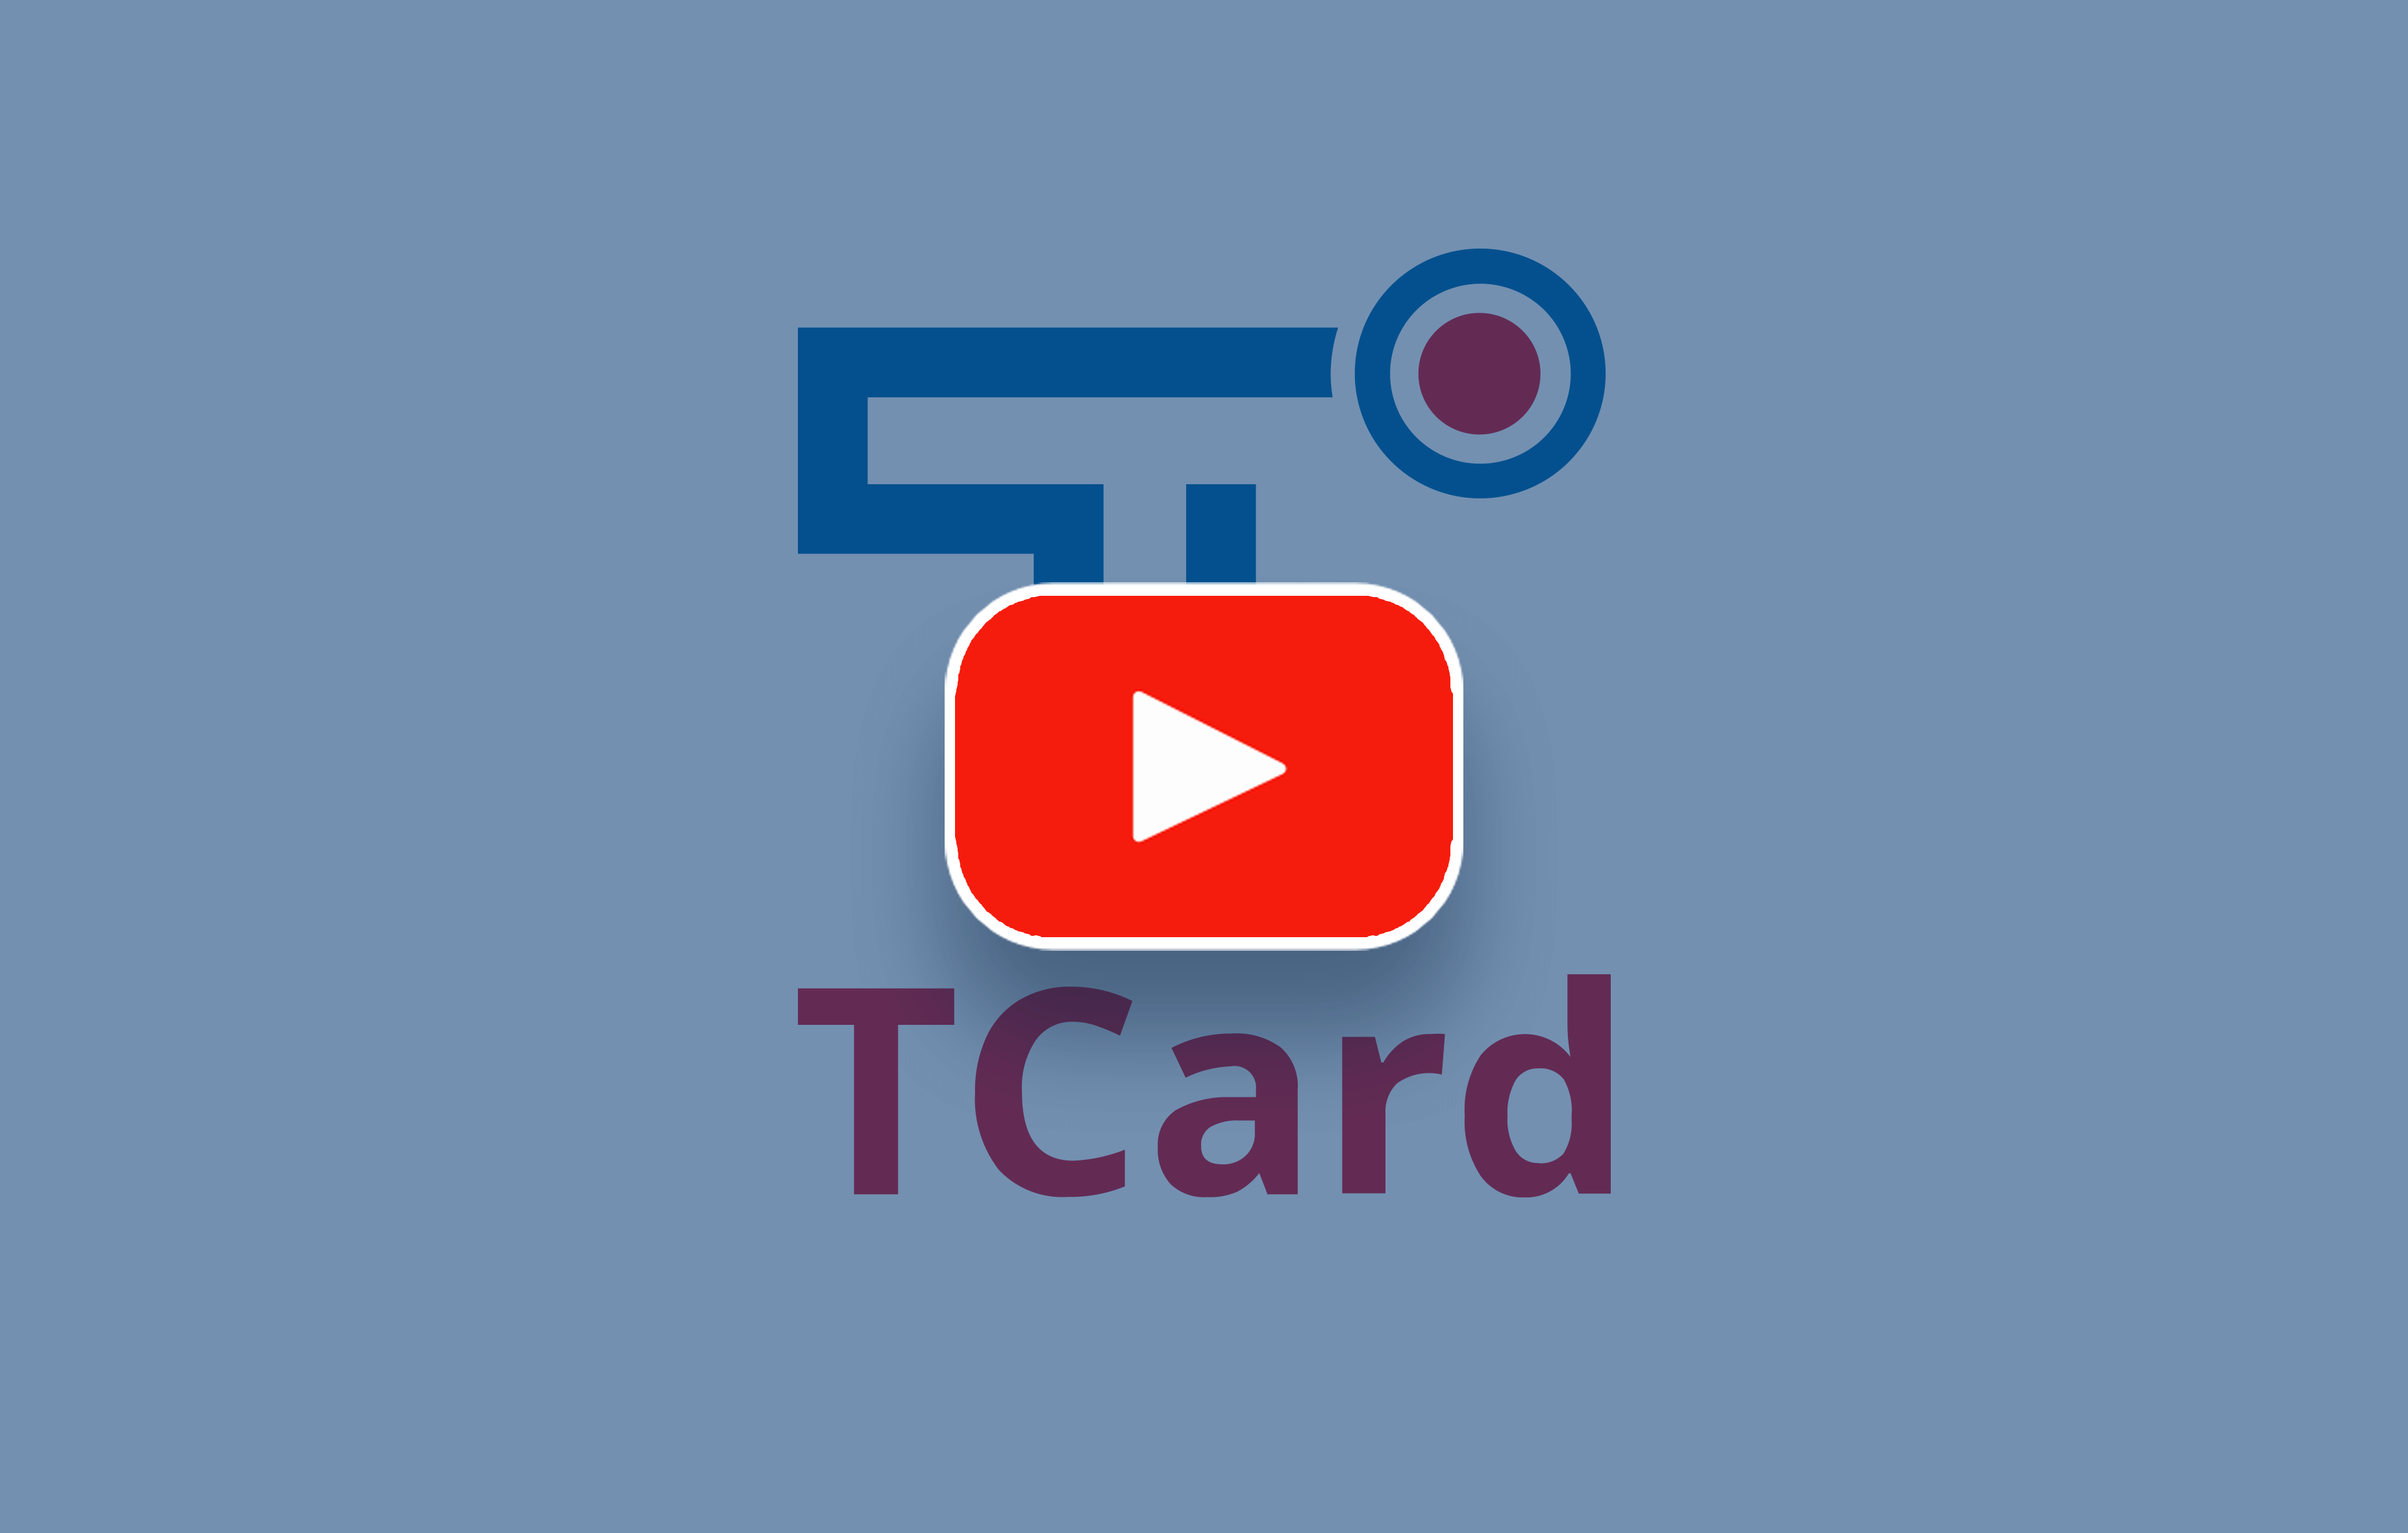 tcard videos